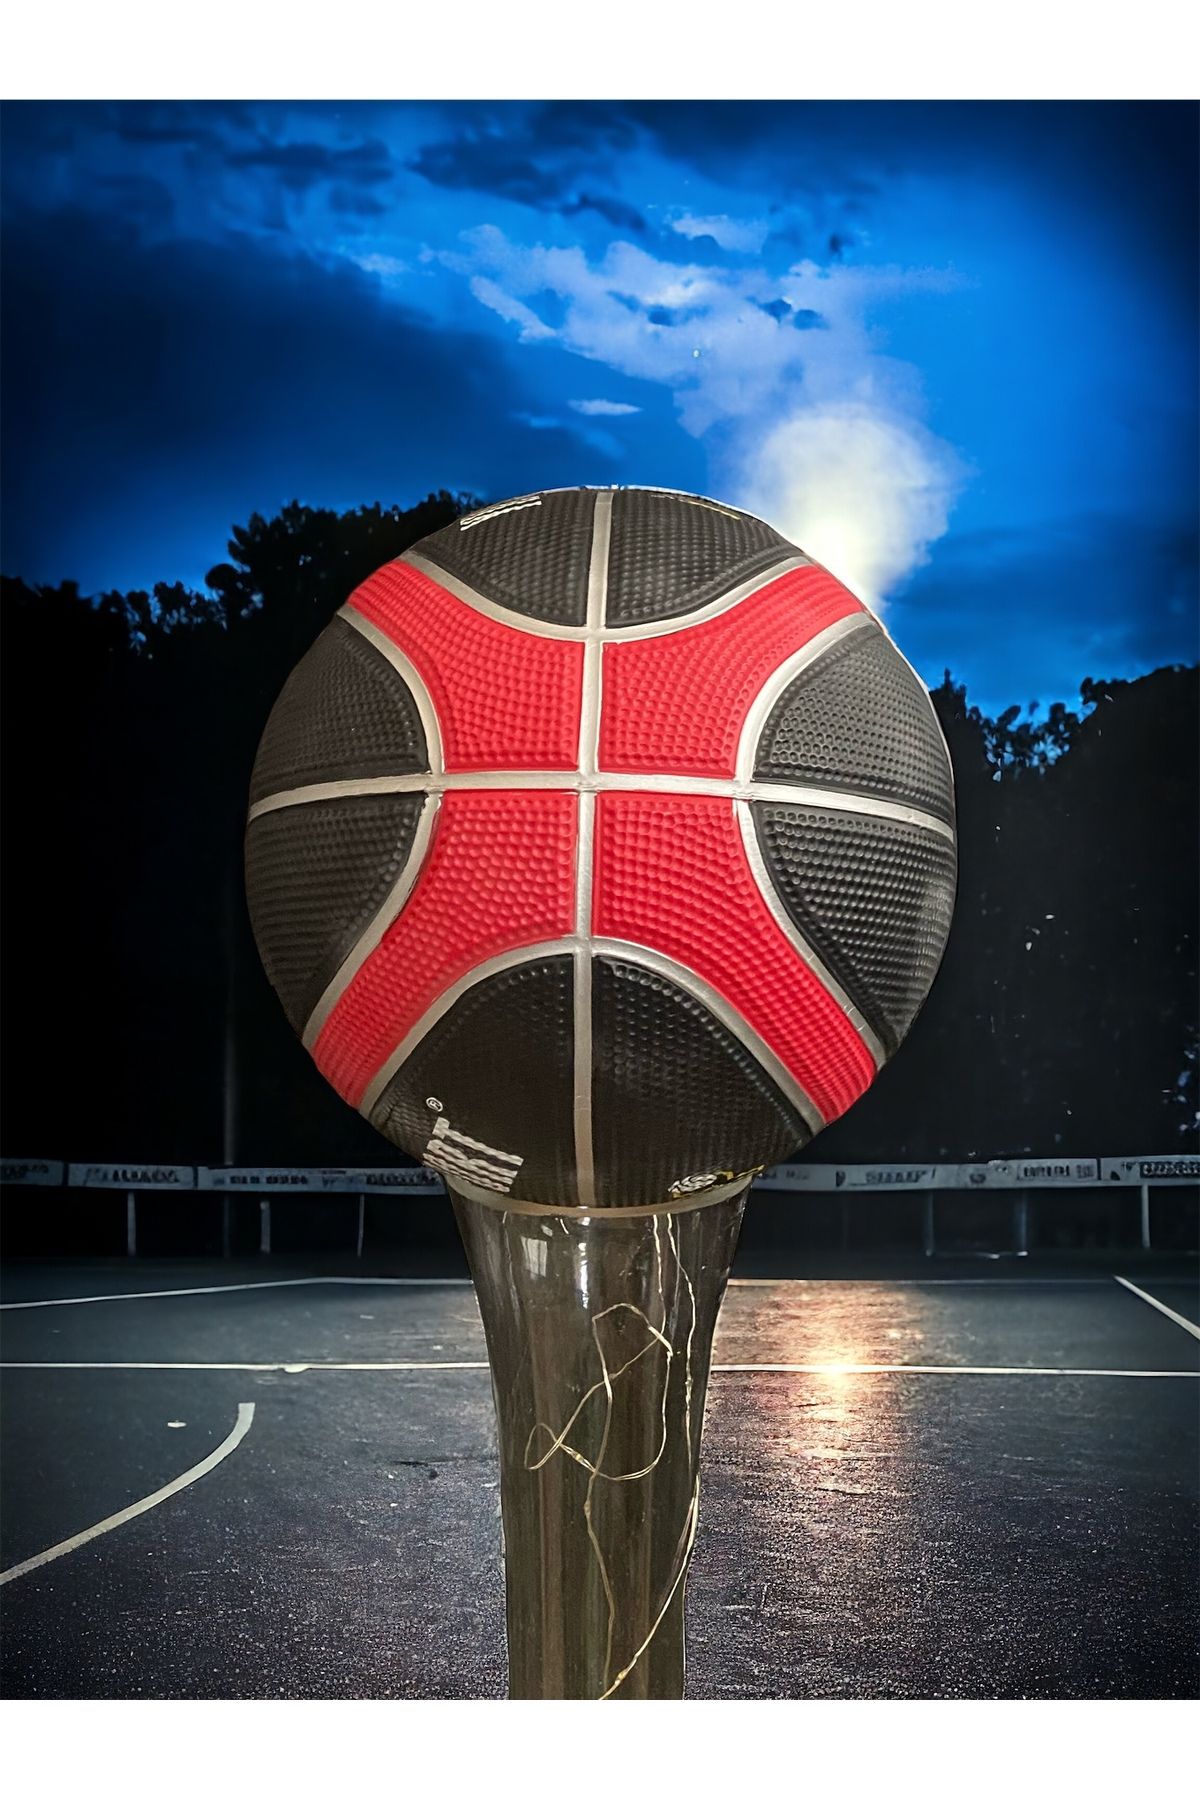 TOCSPORTS Kaliteli Basketbol Topu - Basketball